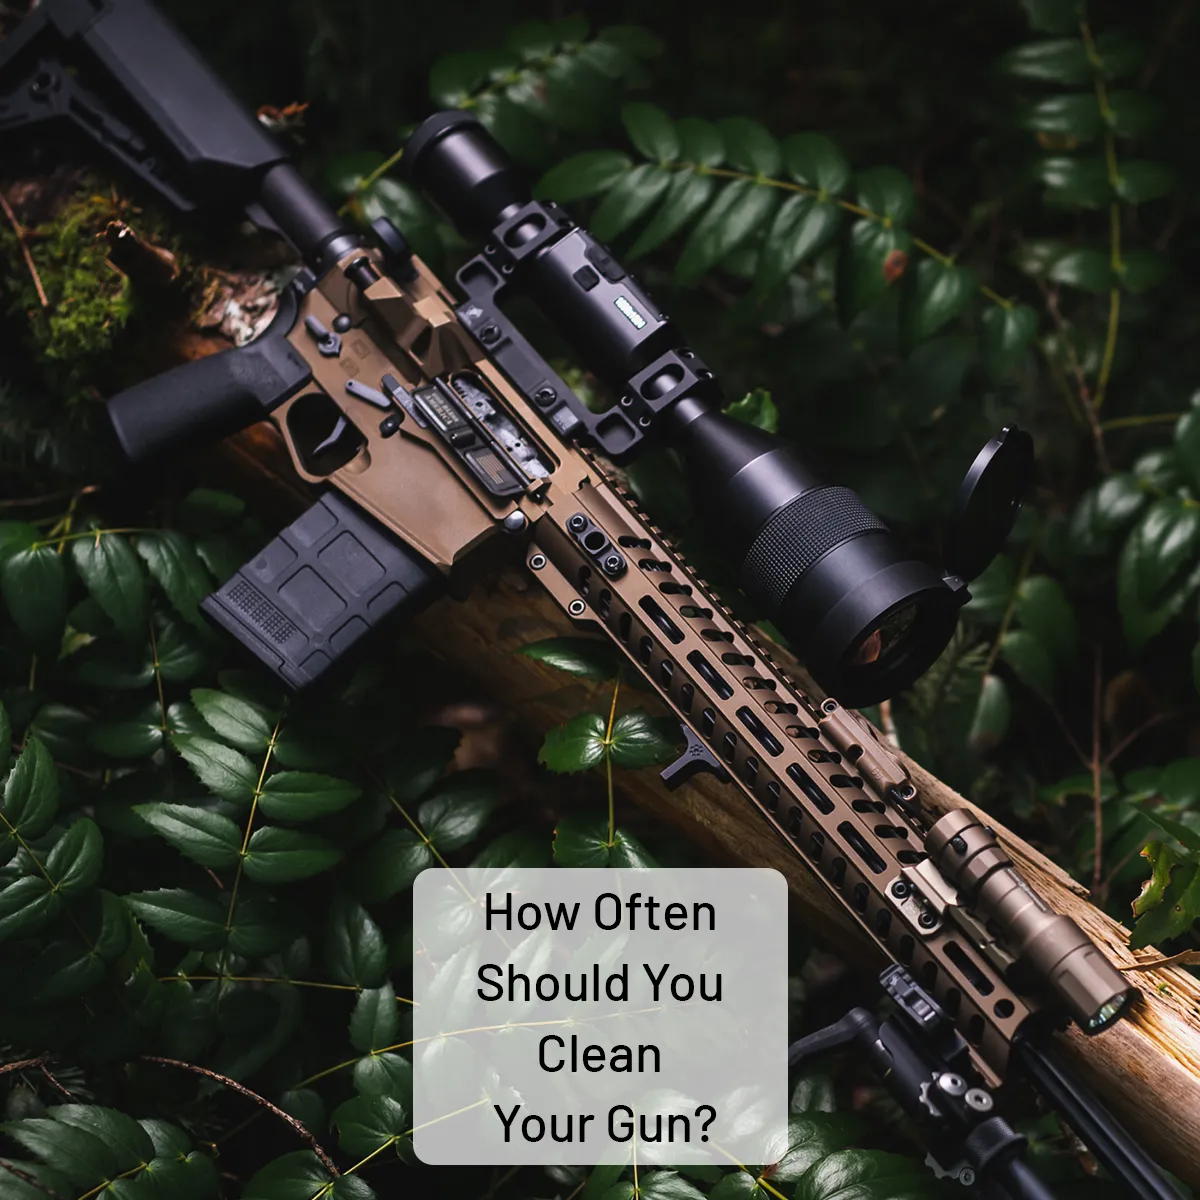 How often should you clean your gun?